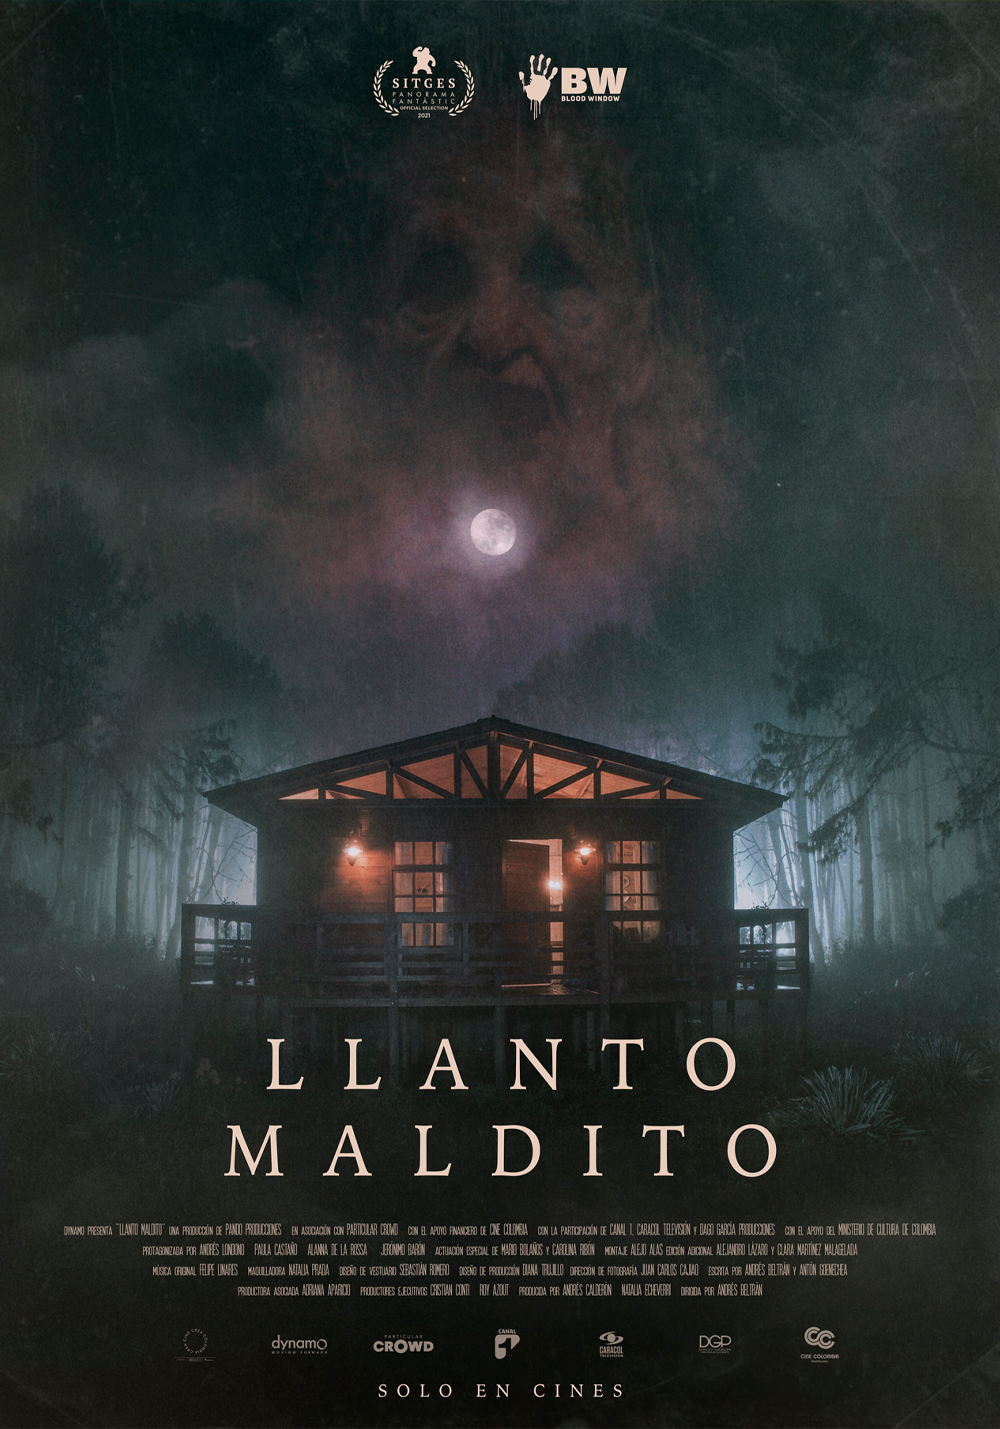 Cine colombiano: LLANTO MALDITO | Proimágenes Colombia